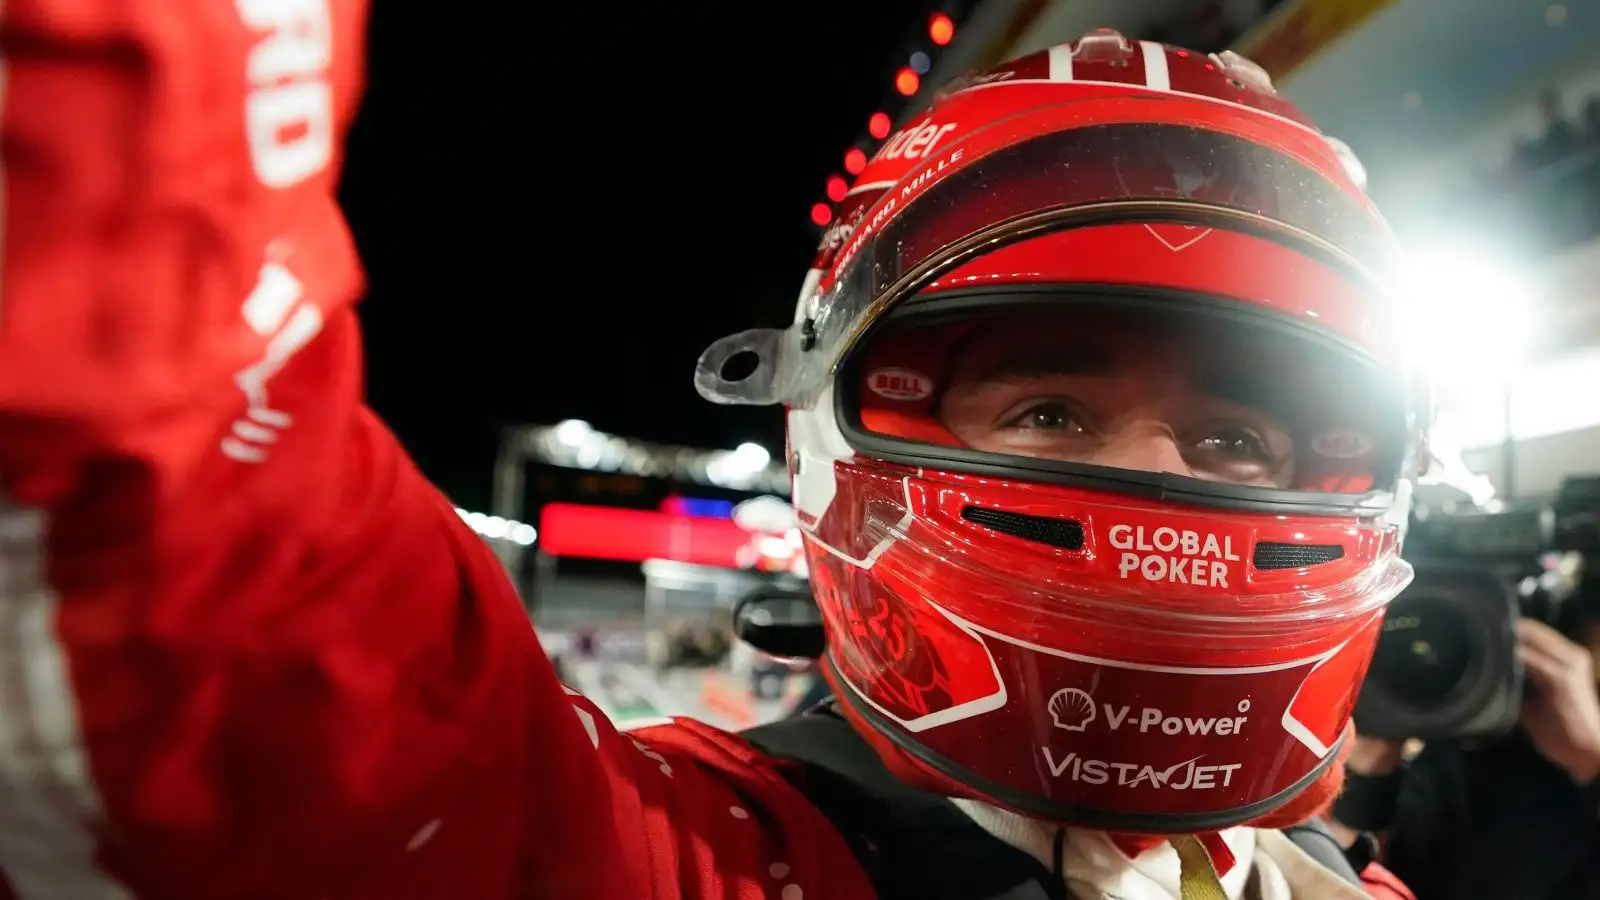 2023 F1 Las Vegas GP qualifying results: Leclerc takes pole